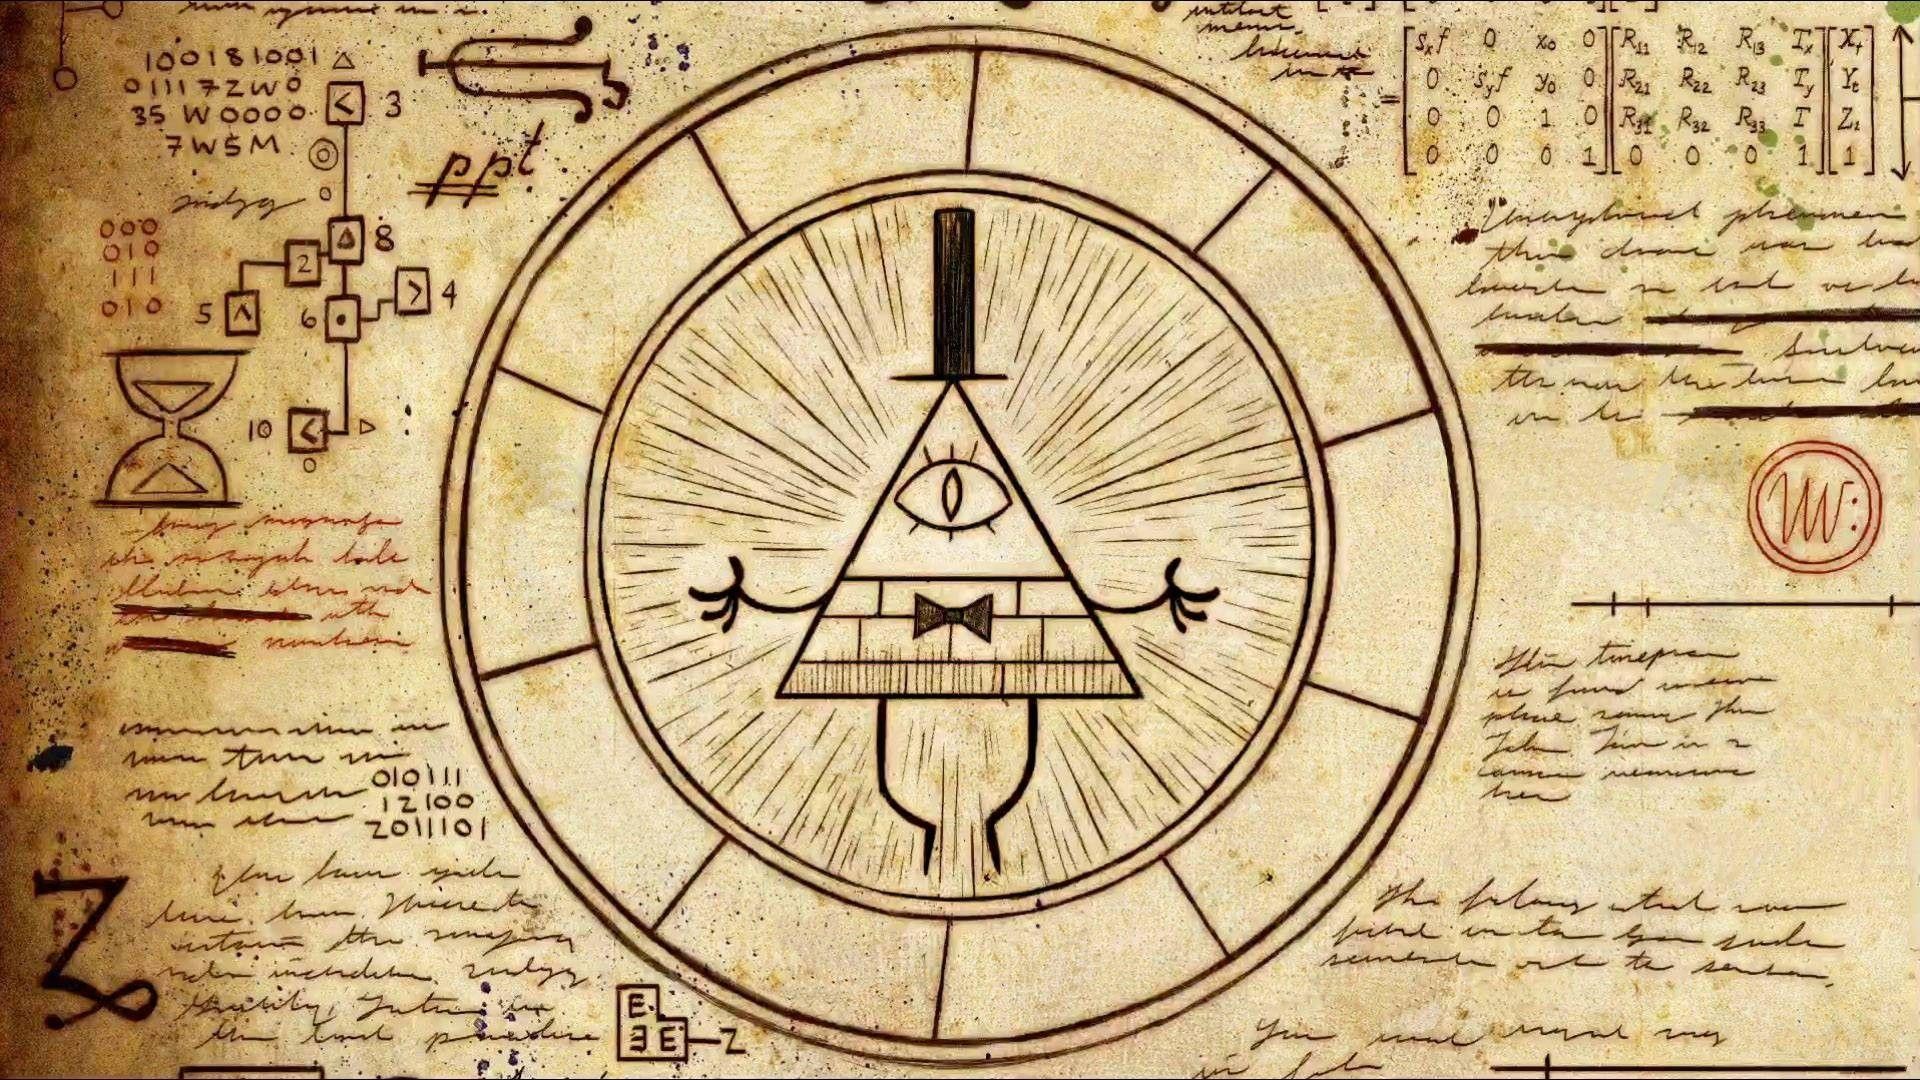 Illuminati Wallpaper 1080p Image